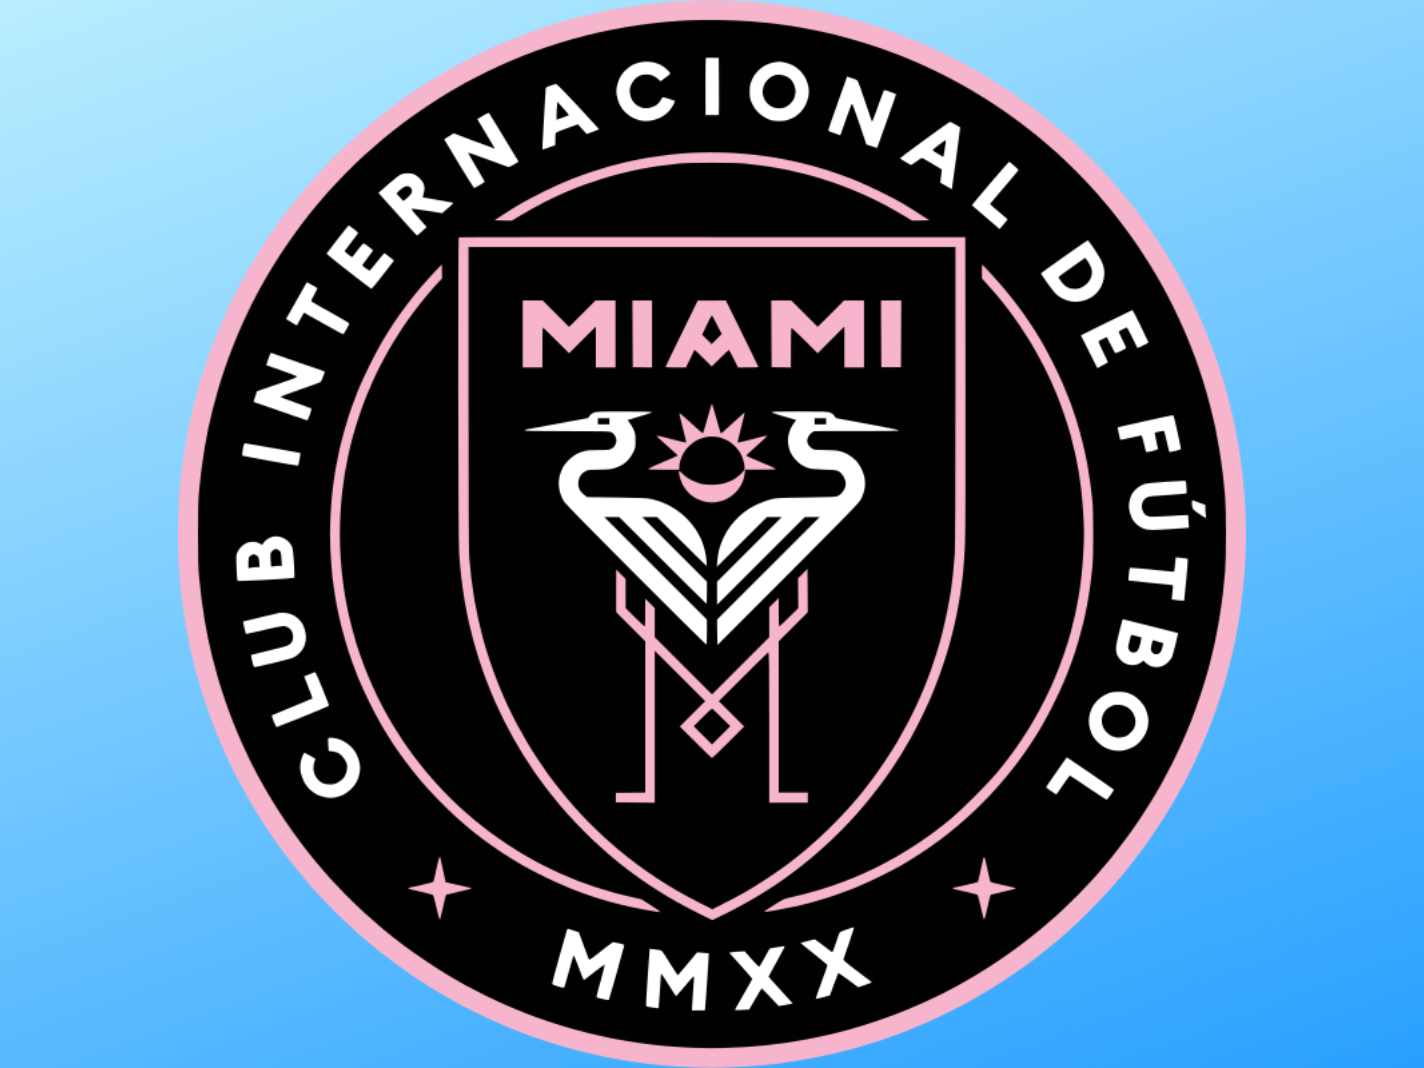 Boldest Inter Miami Concept Kit Yet Puts Swan Logo in Spotlight